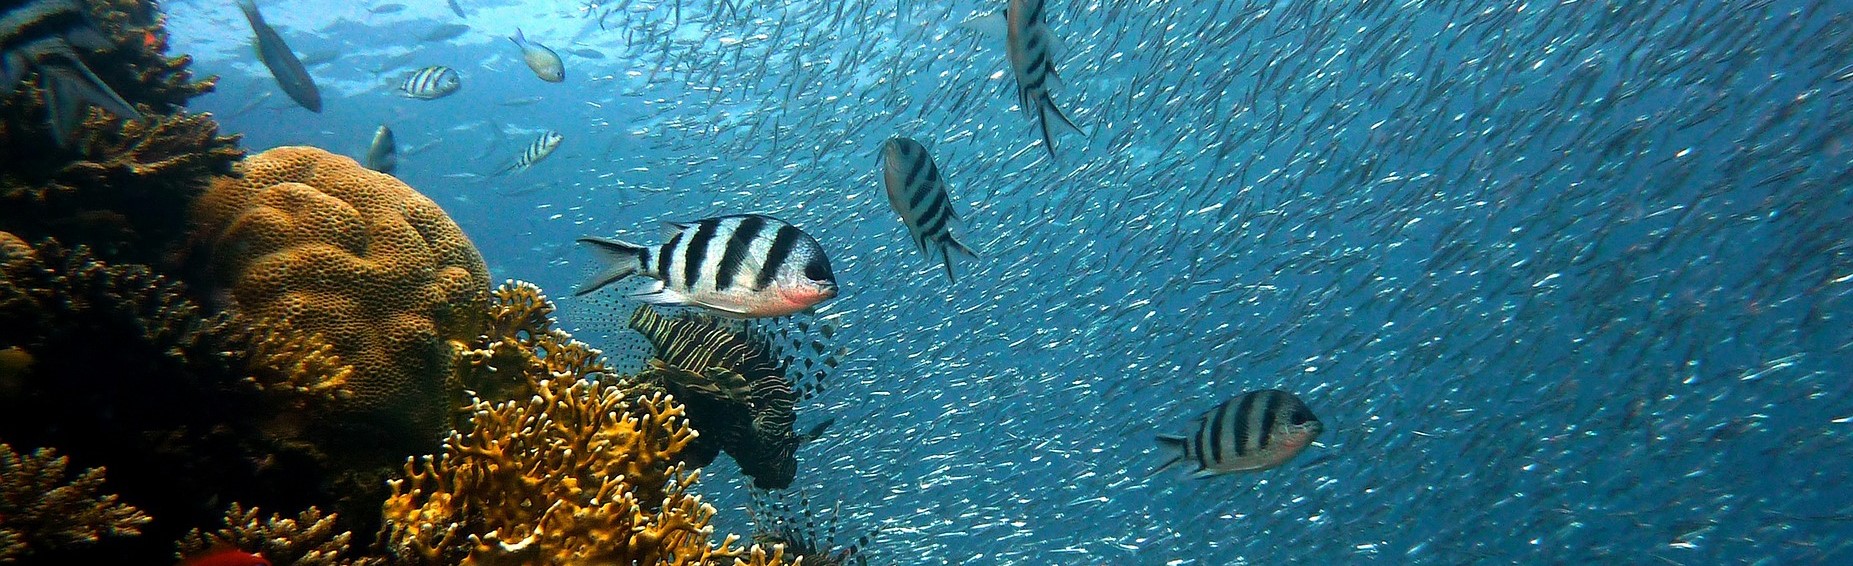 fonds marin poisson